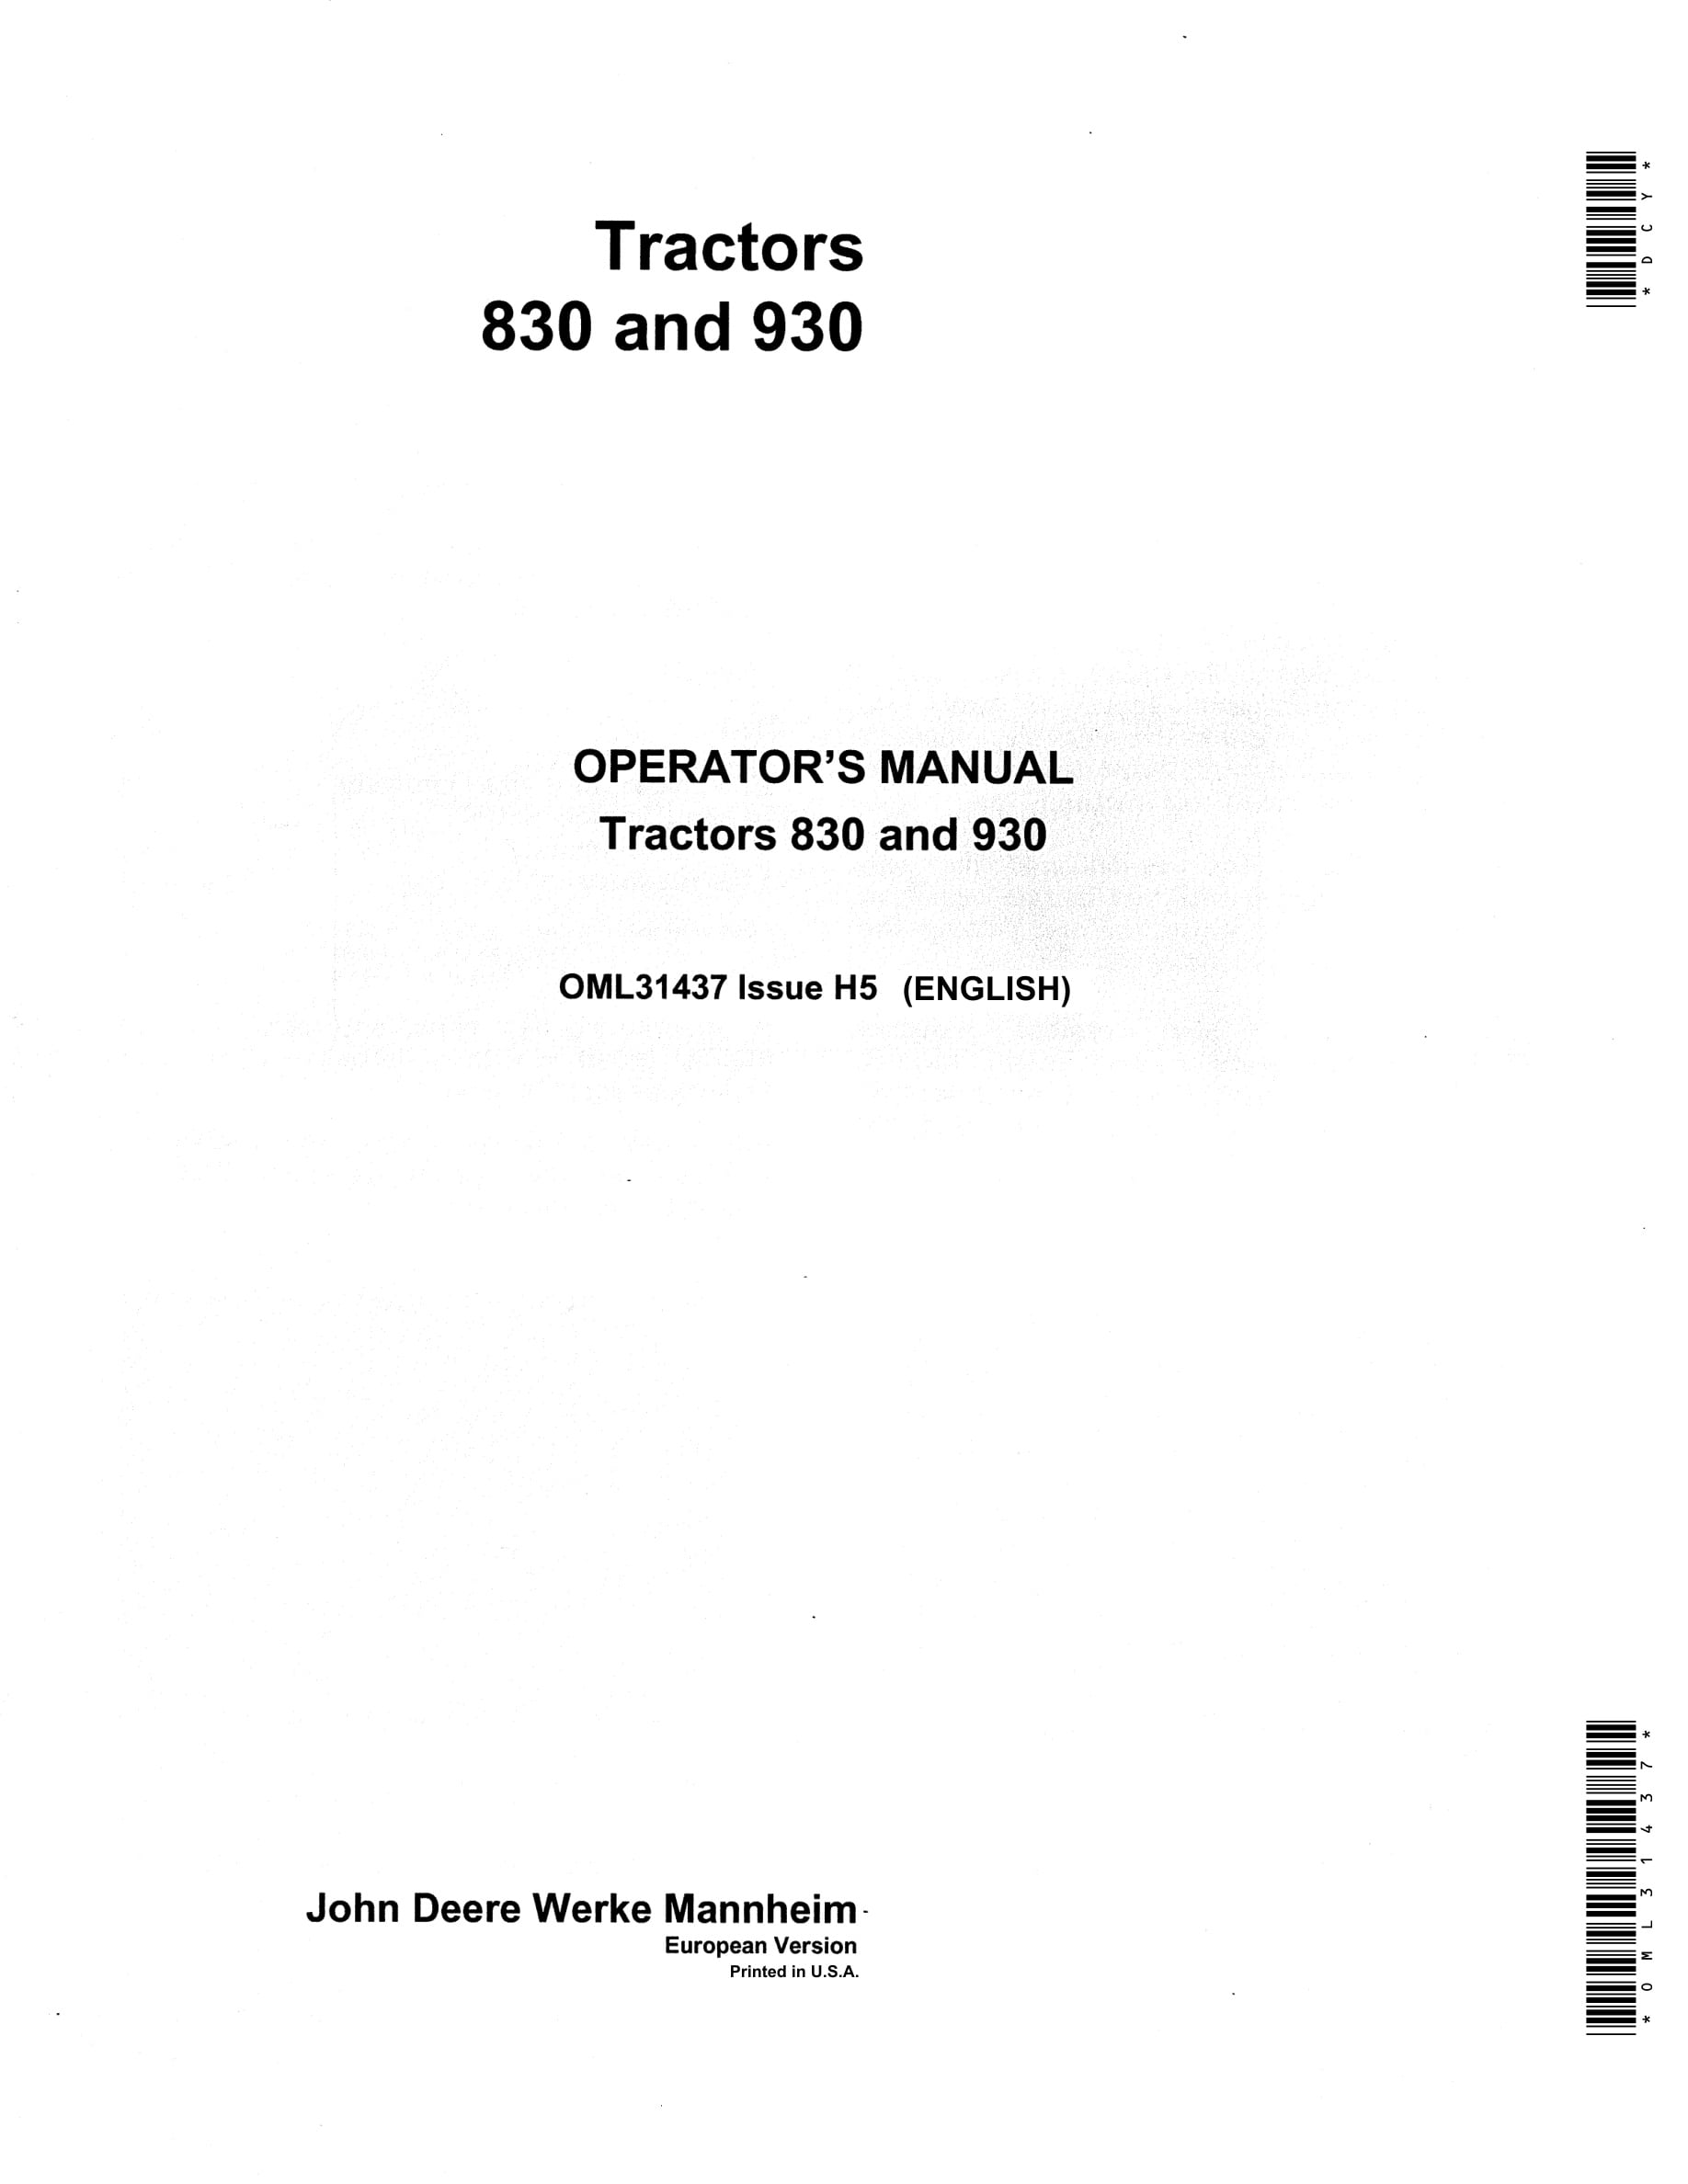 John Deere 830 930 Tractors Operator Manuals OML31437-1